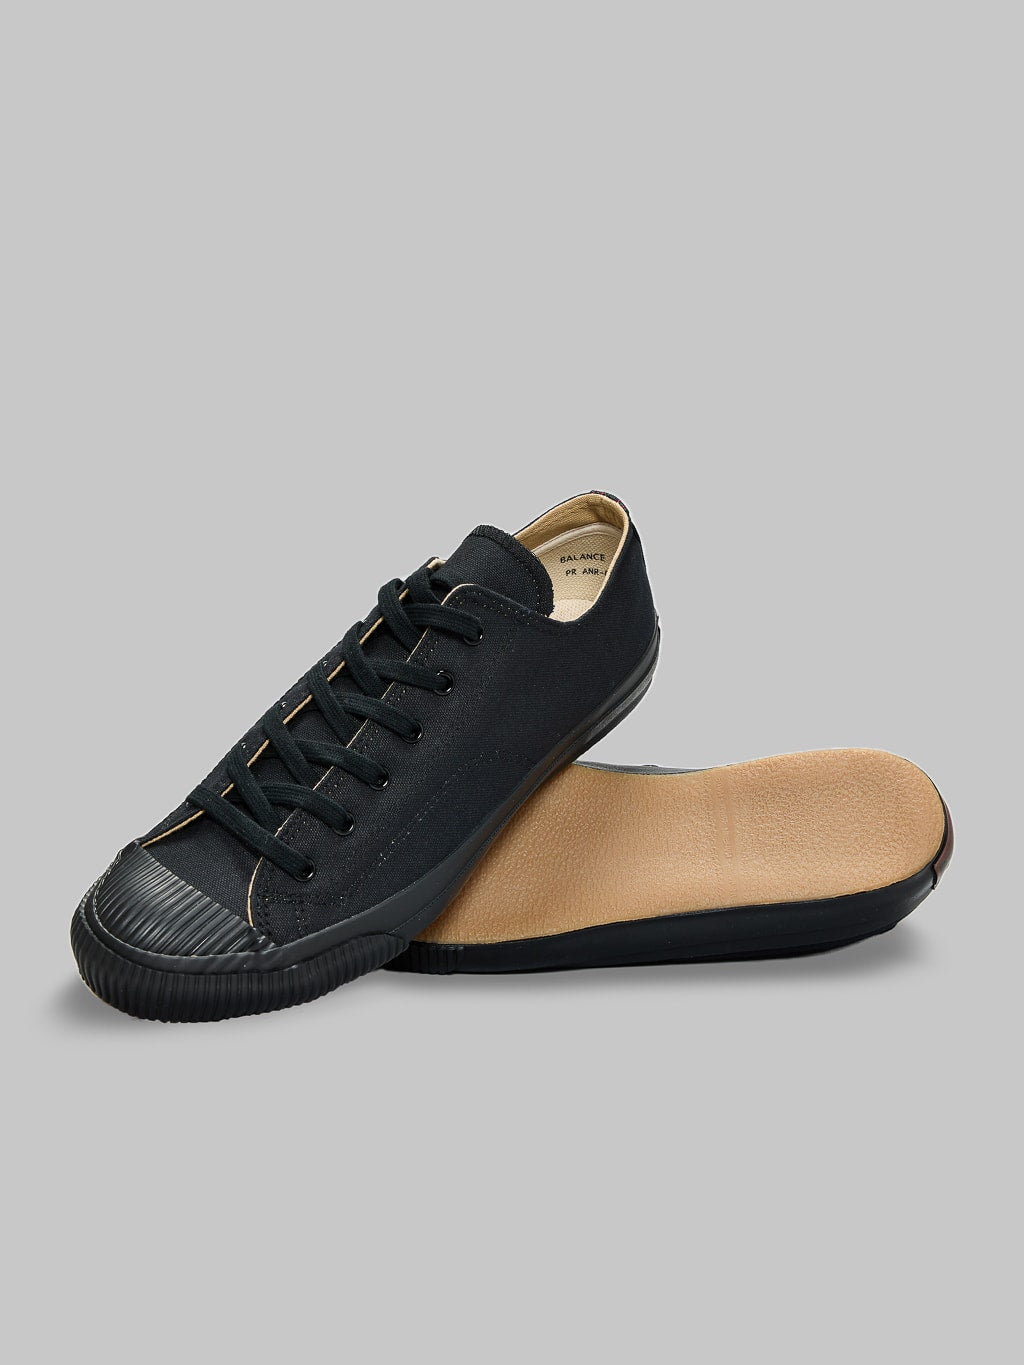 Pras shellcap low sneakers kuro black gum sole